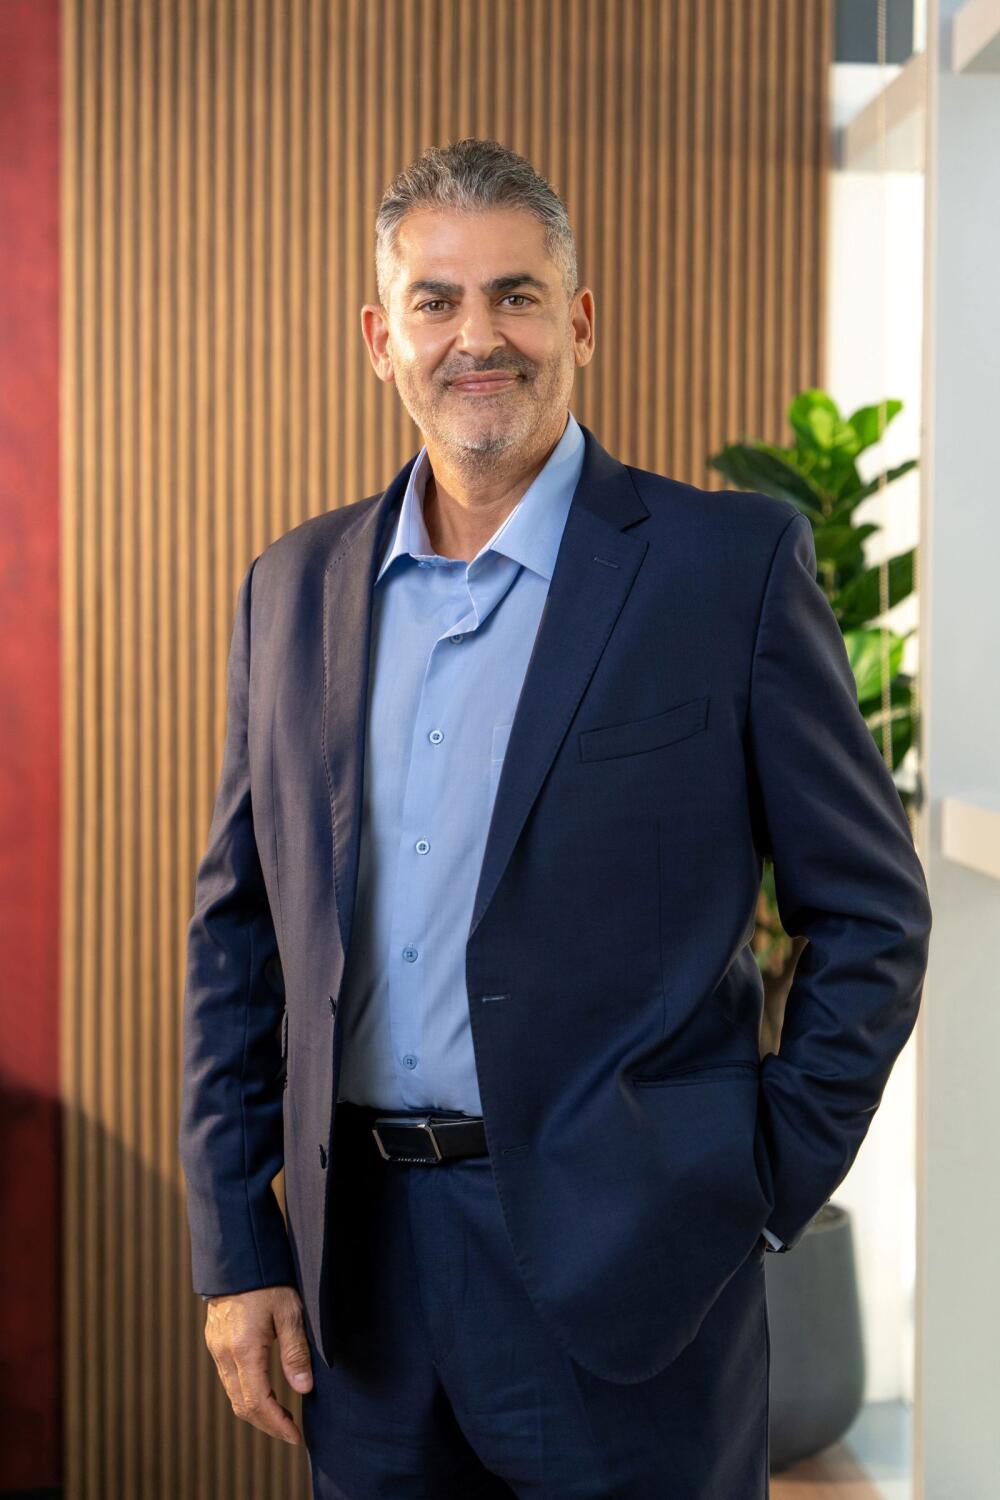 Cherif Sleiman, chief revenue officer at Property Finder